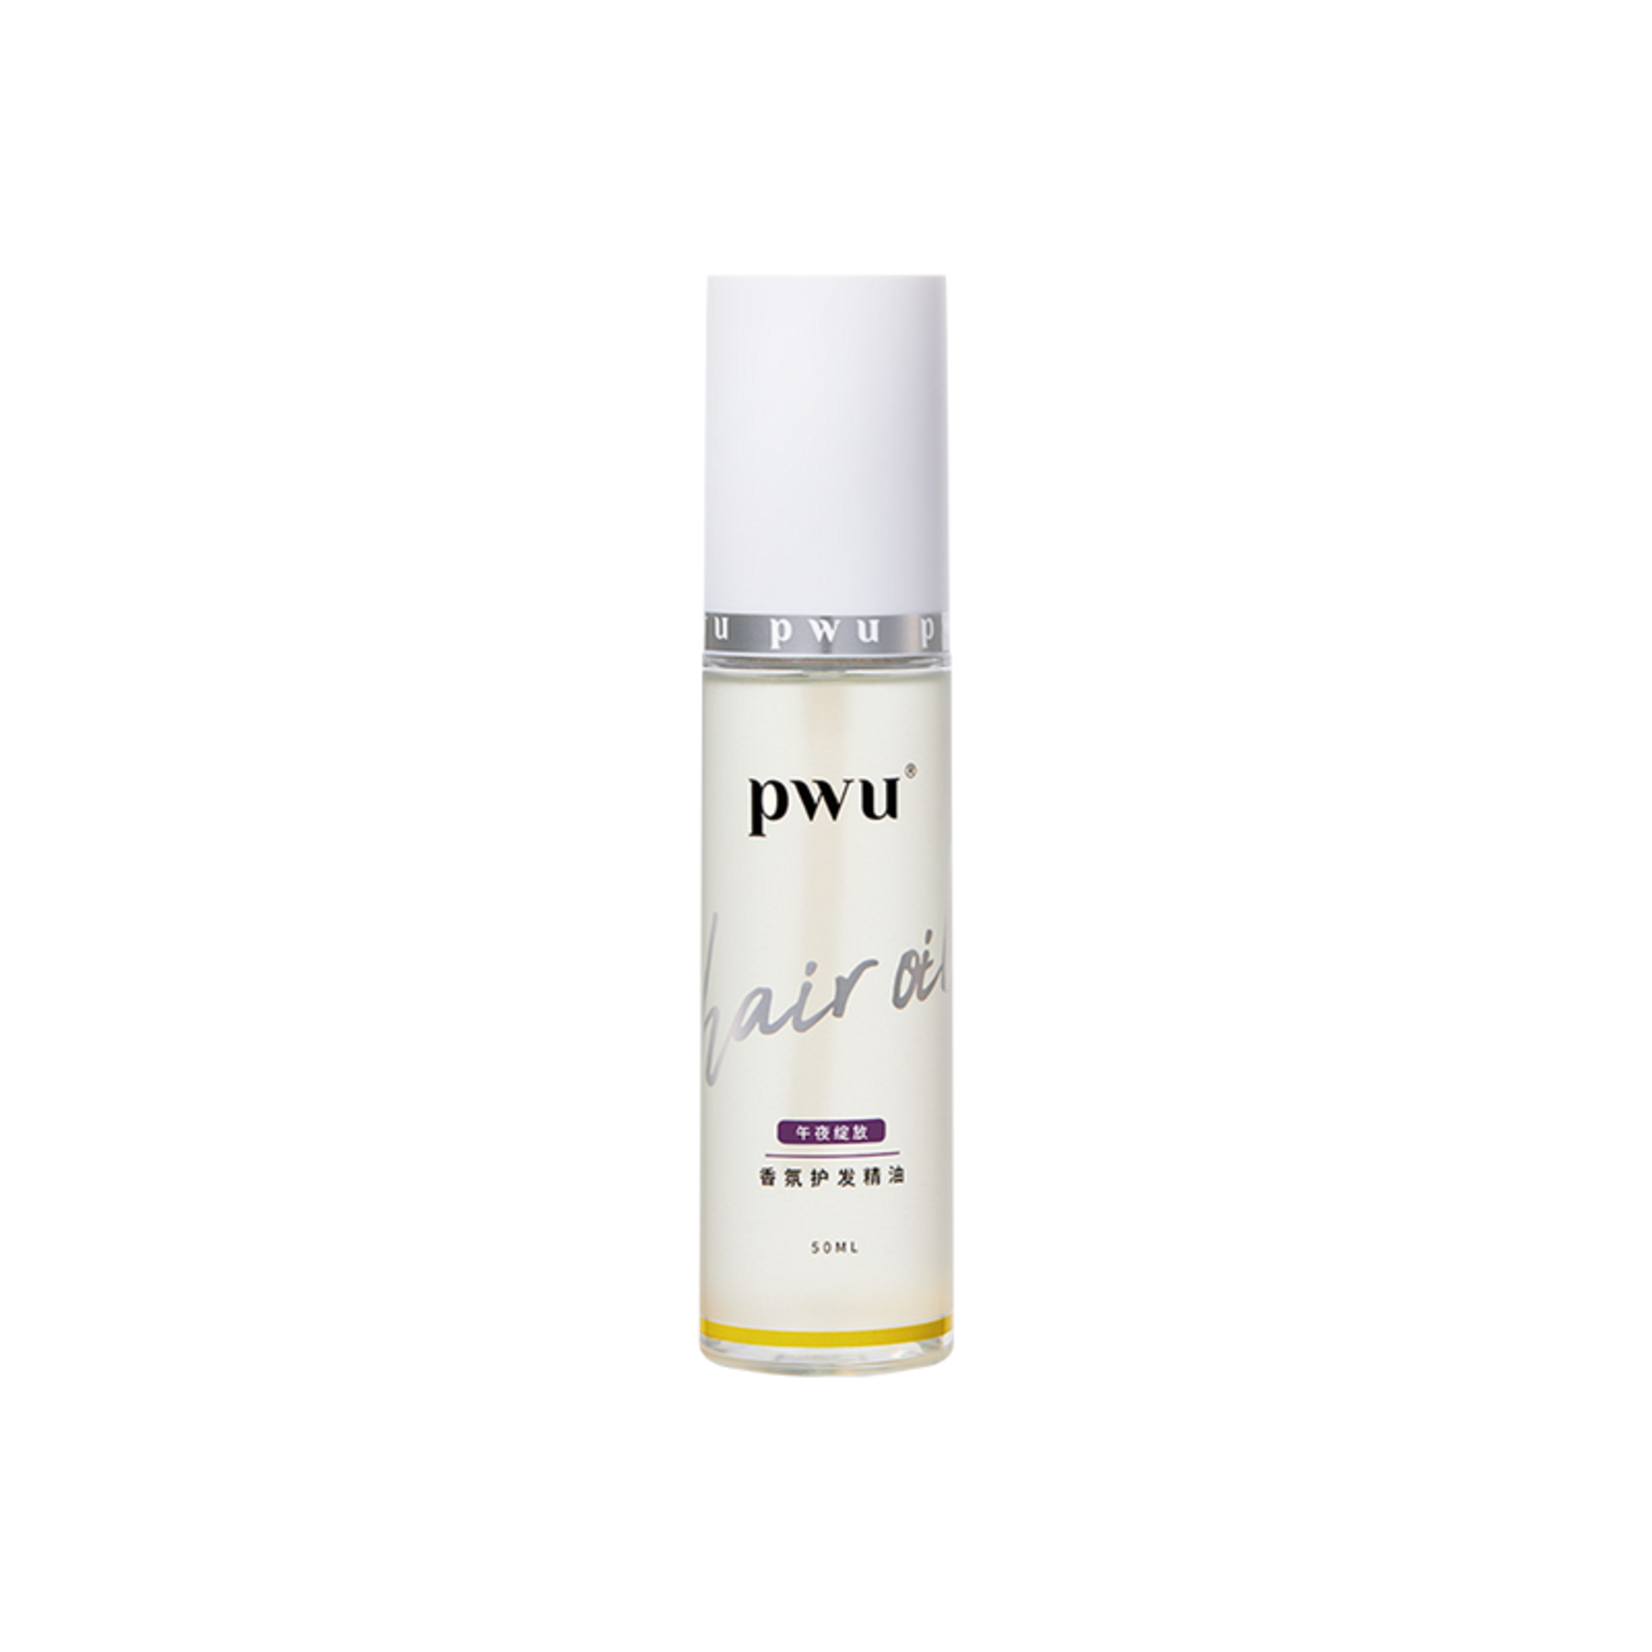 PWU Fragrance Hair Serum 50ml - Kira Kira Beauty